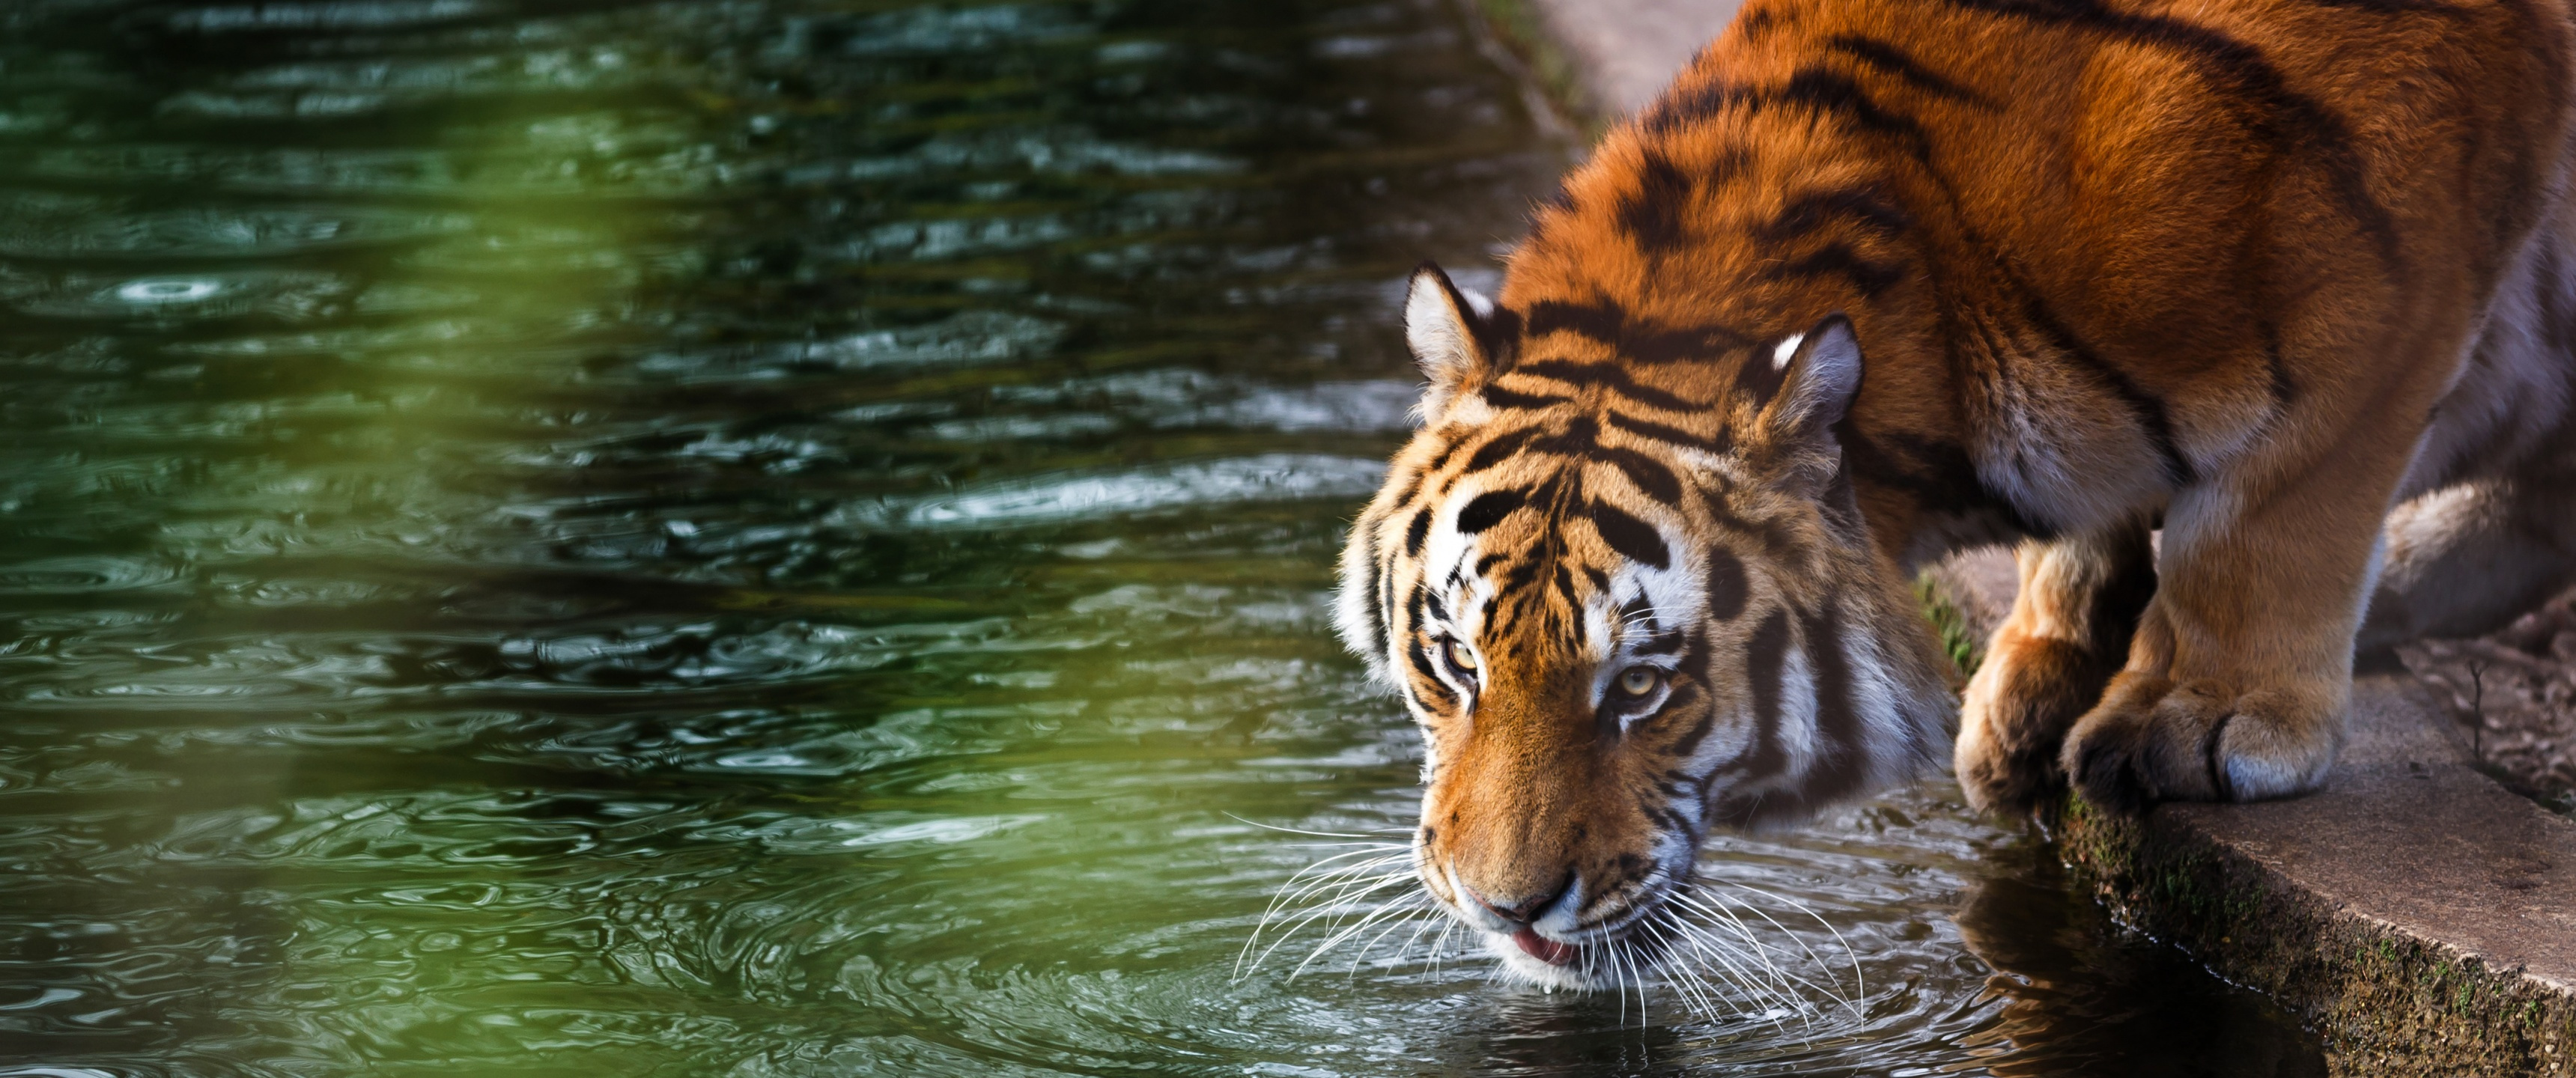 21 animal. Тигр. Тигры и леопарды. Животные пьют воду.